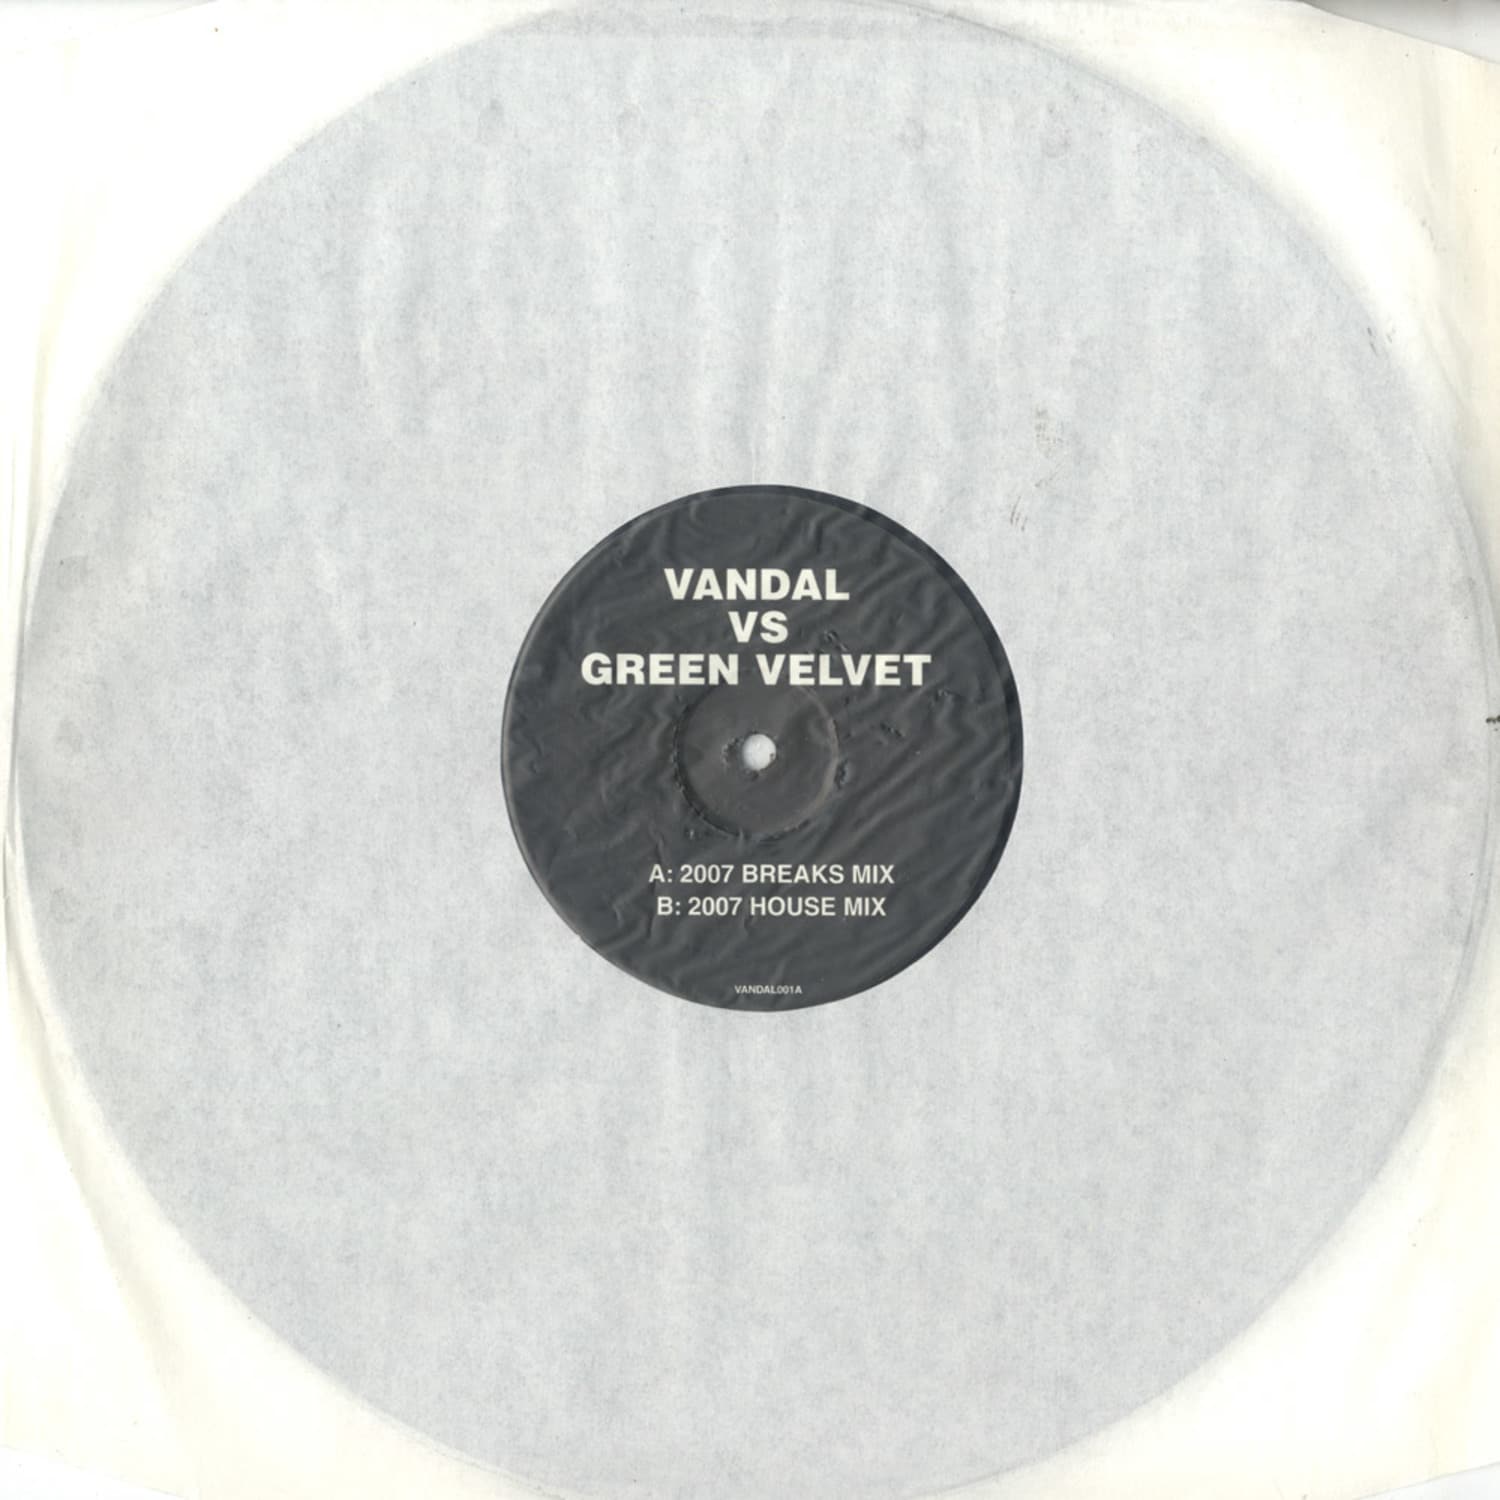 Vandal vs Green Velvet - LA LA LAND